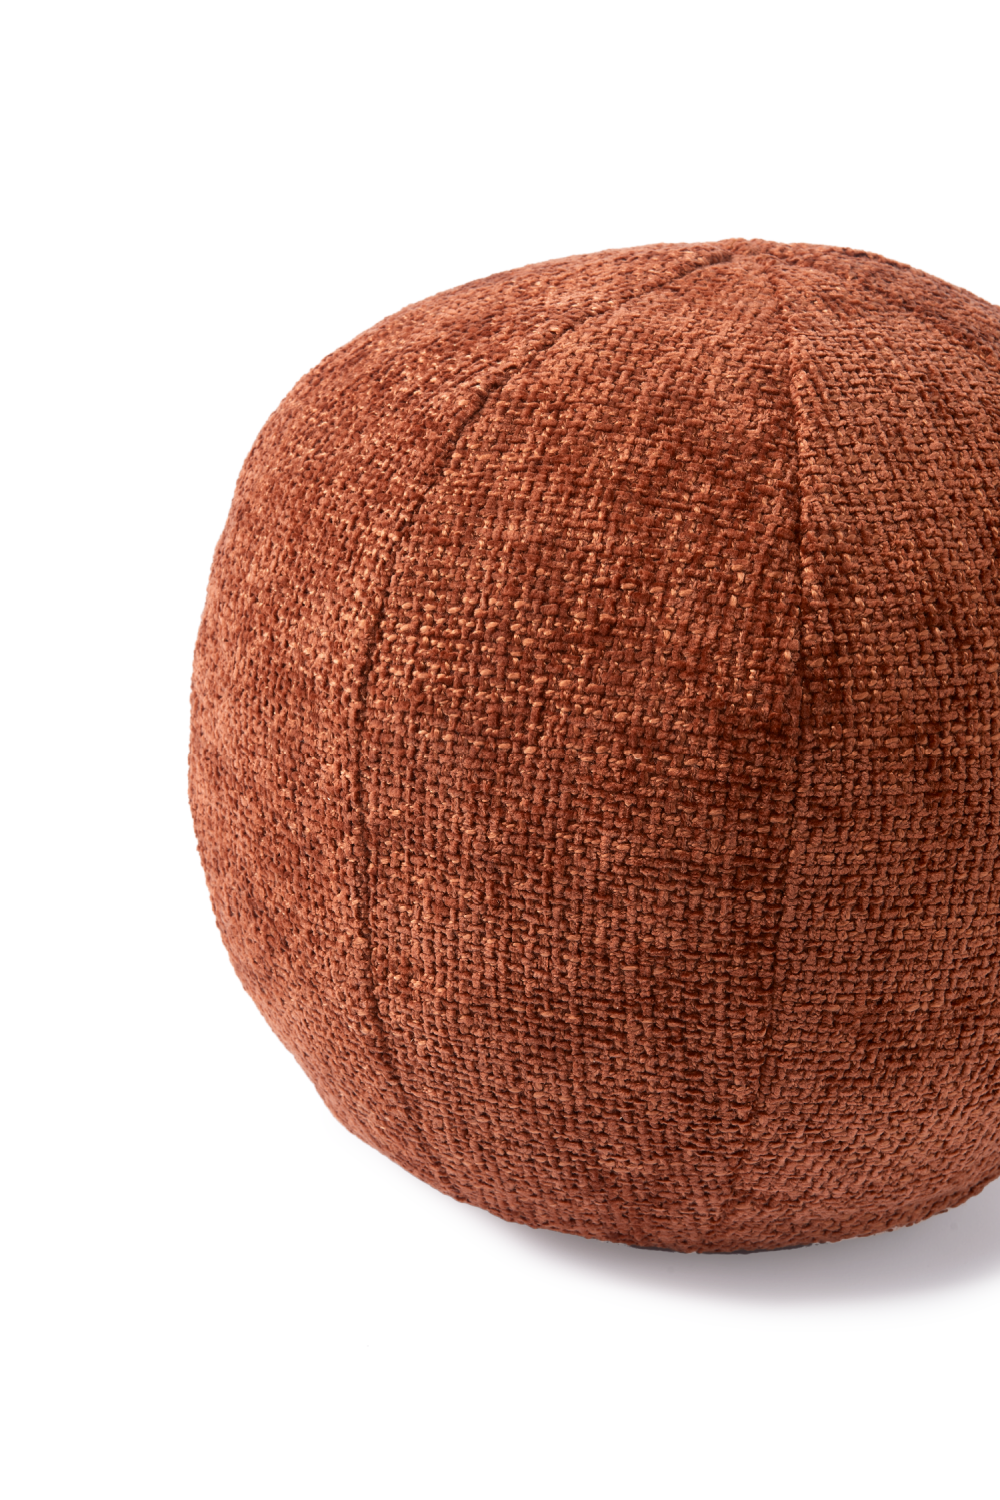 Spherical Modern Cushion L | Pols Potten Ball | Oroa.com